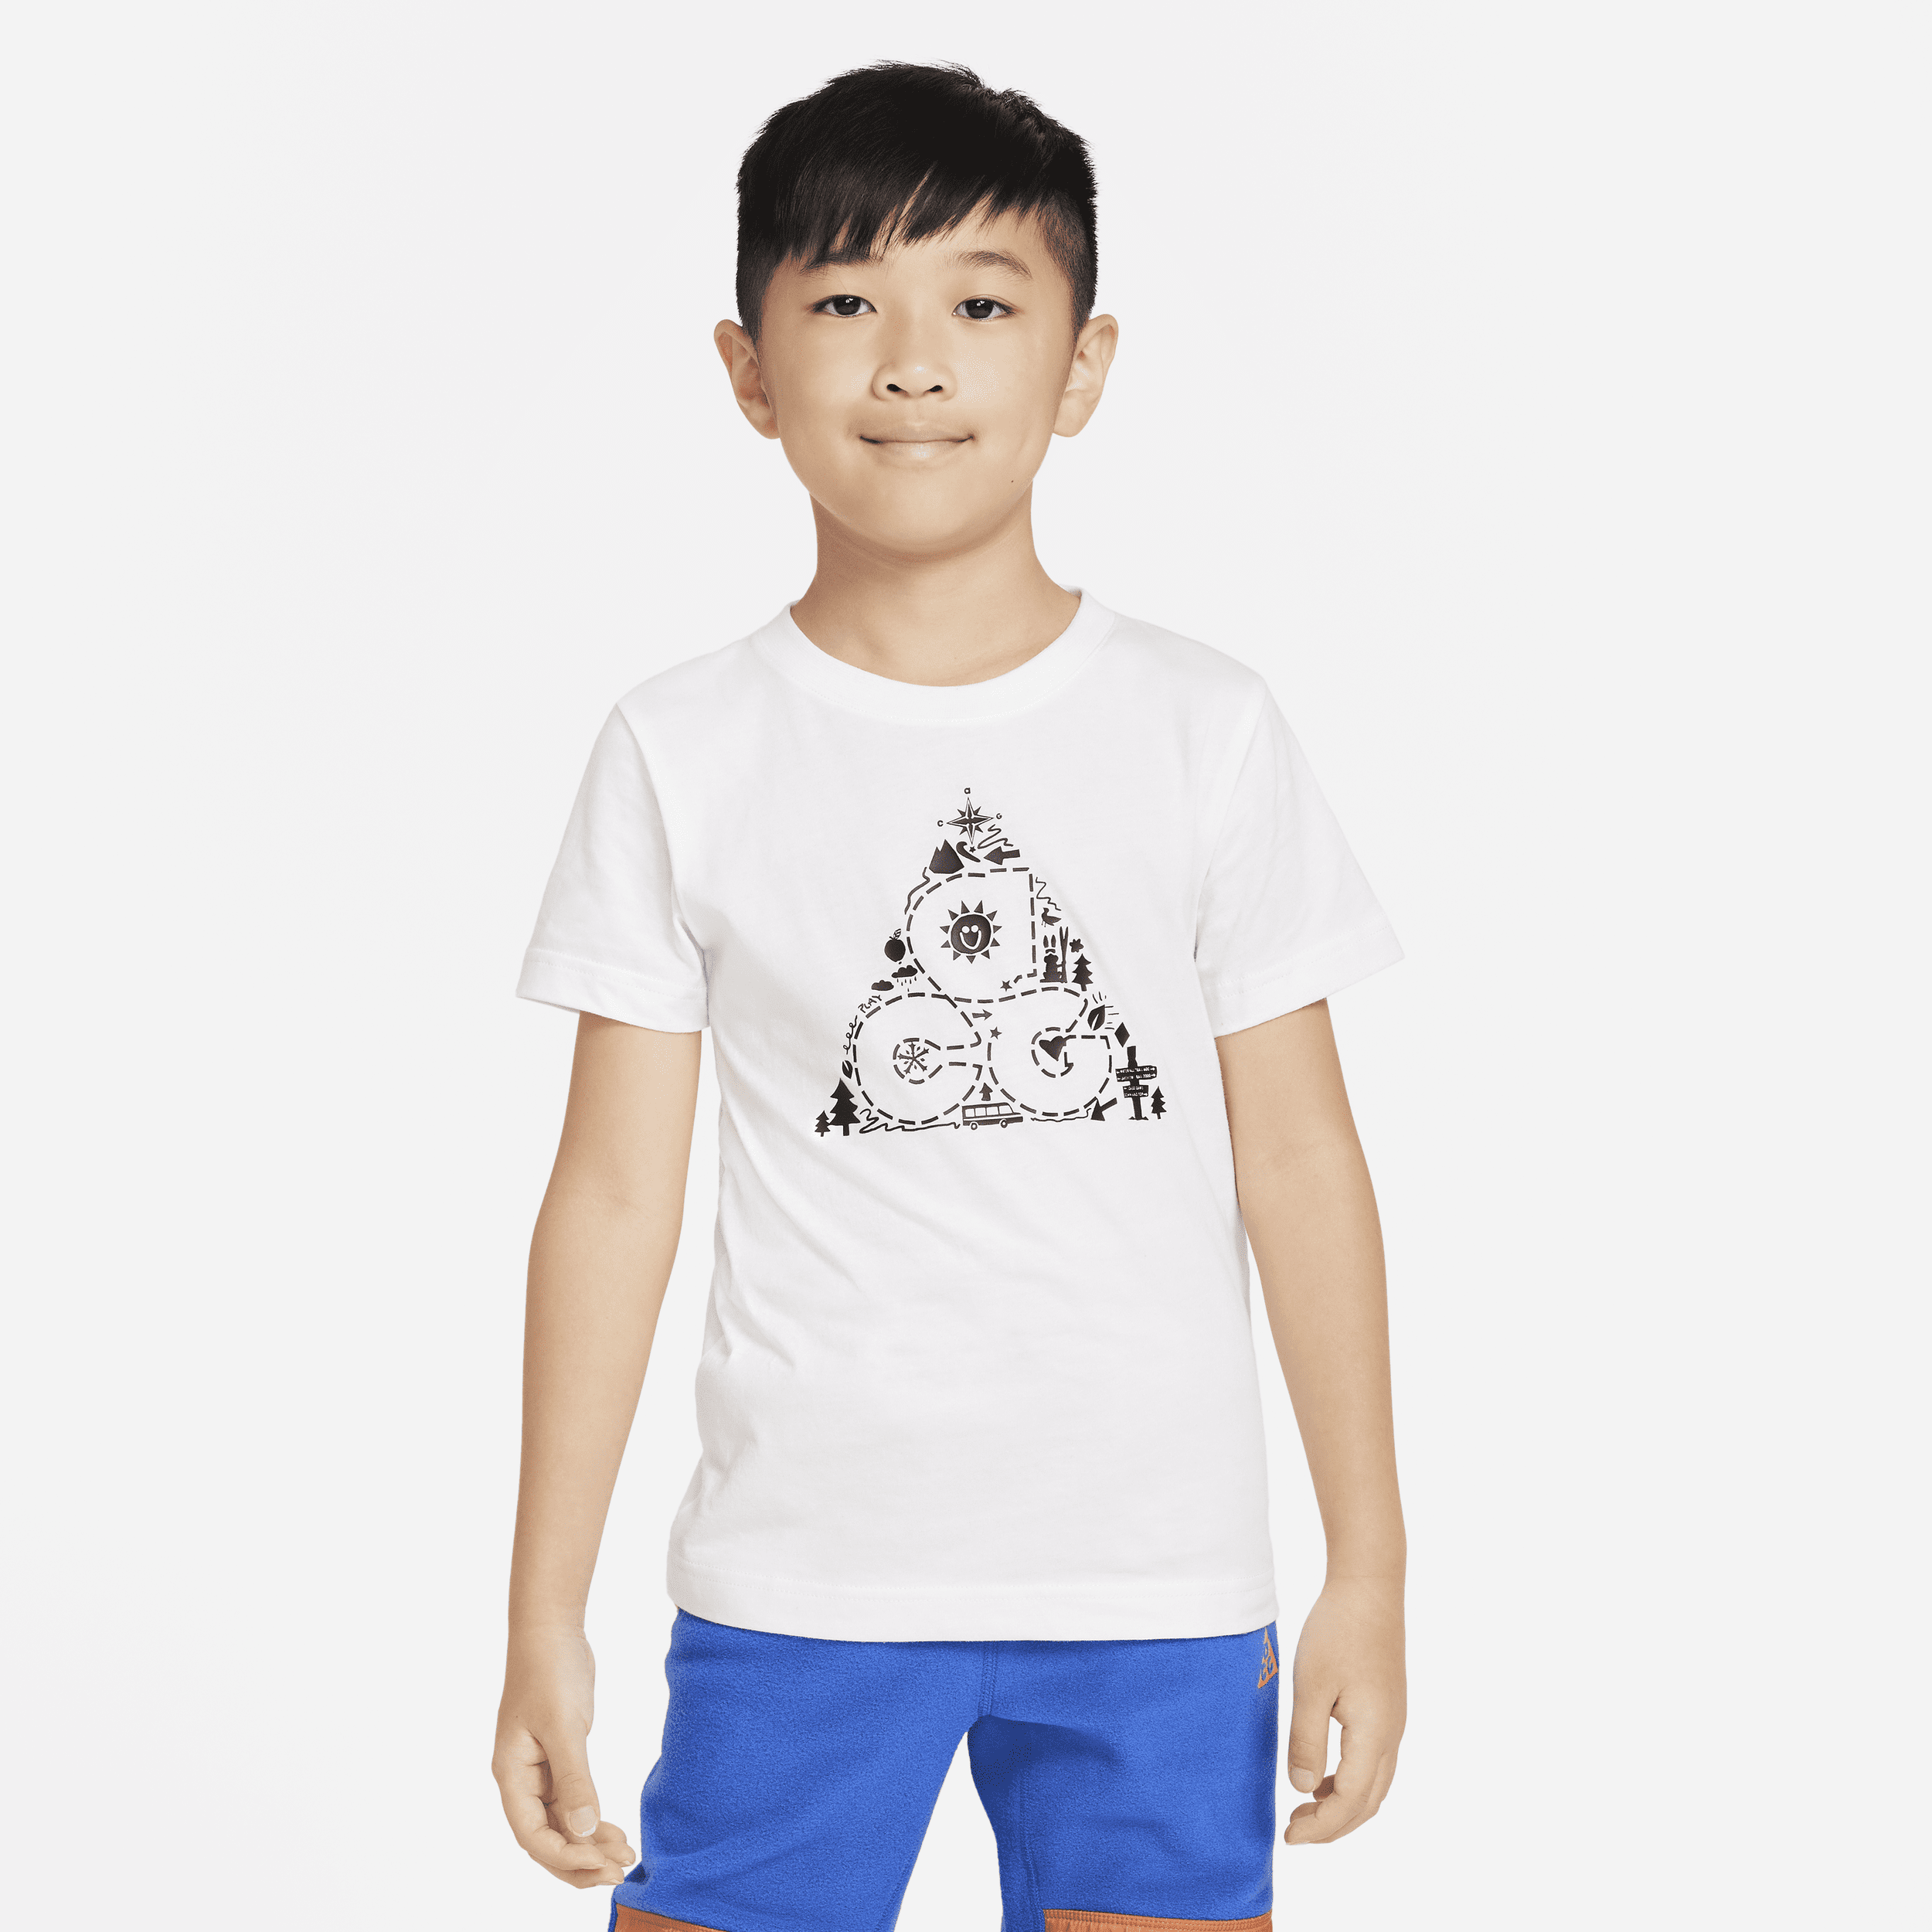 Nike Camiseta ACG - Niño/a pequeño/a - Blanco